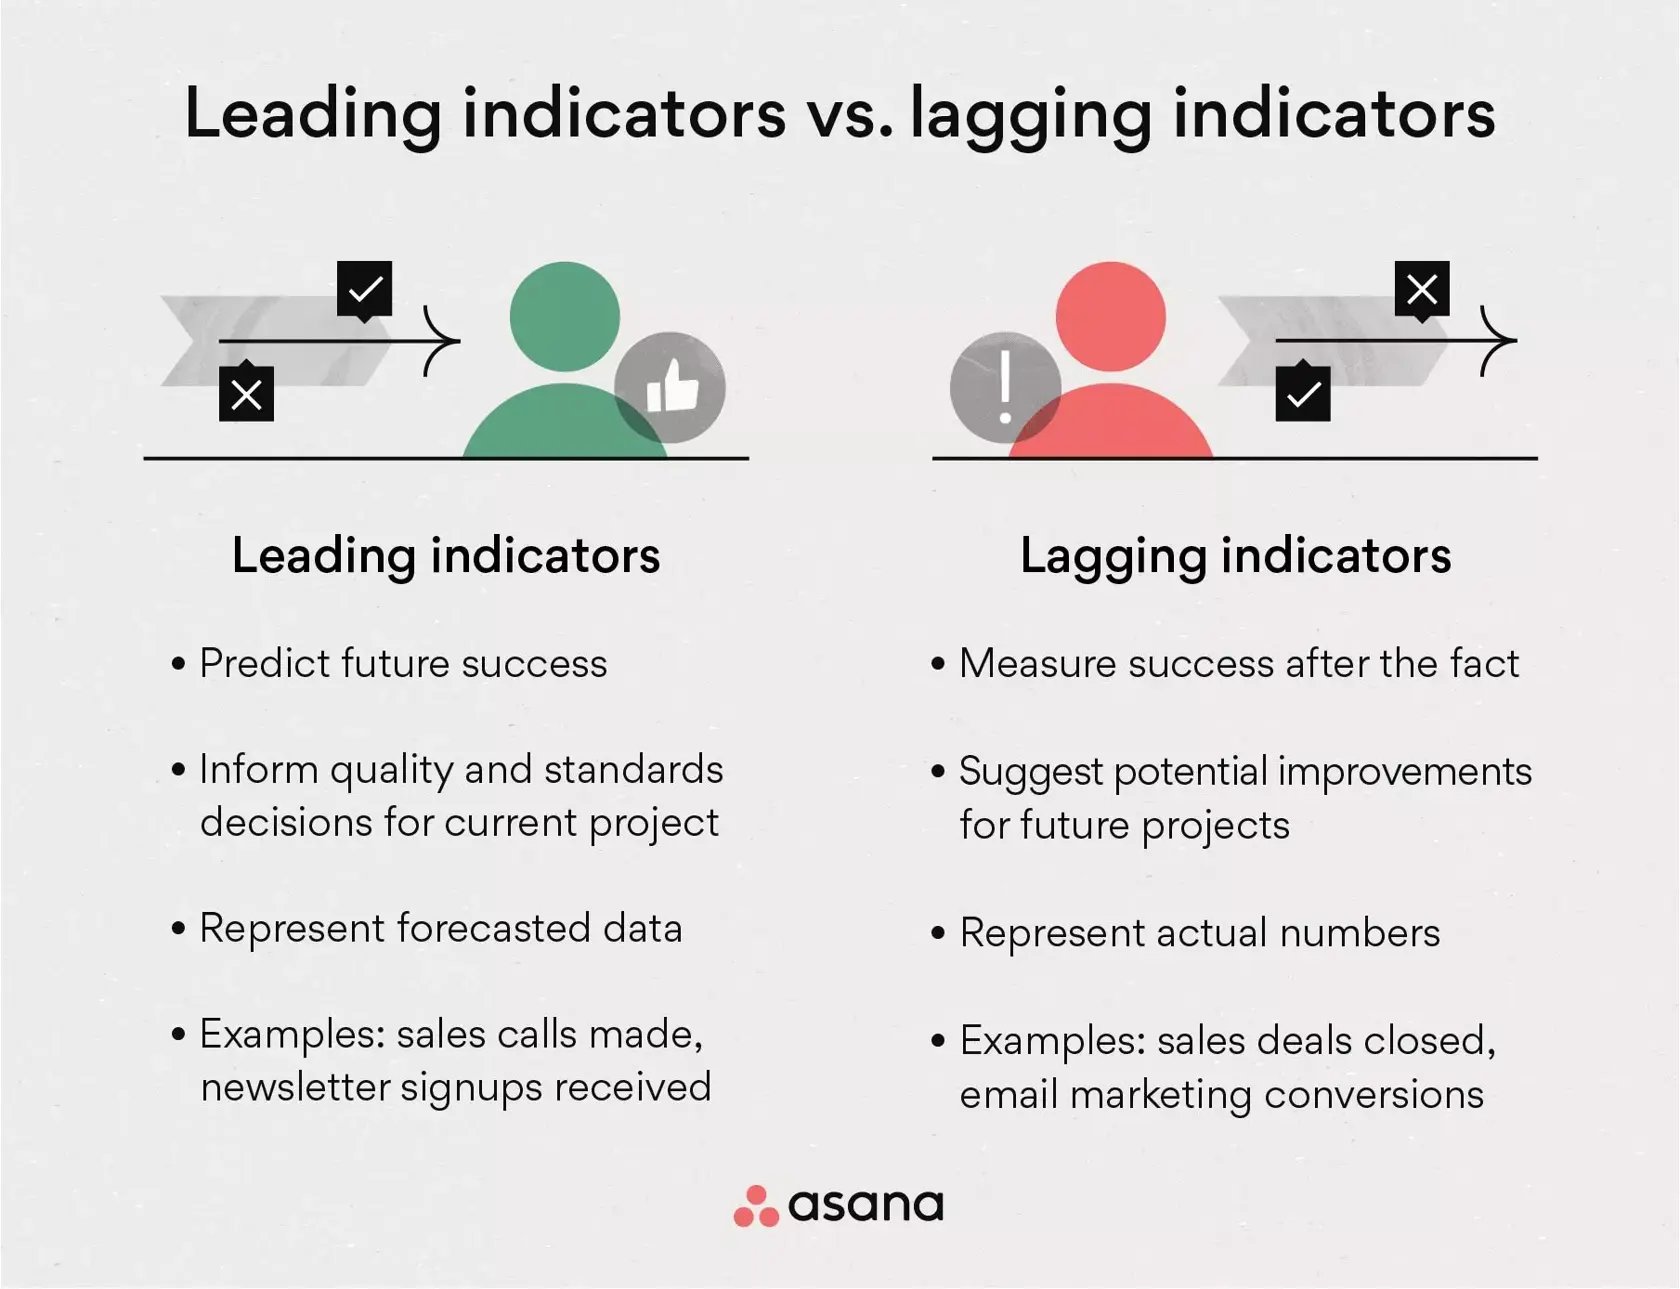 [inline illustration] Leading indicators vs. lagging indicators (infographic)